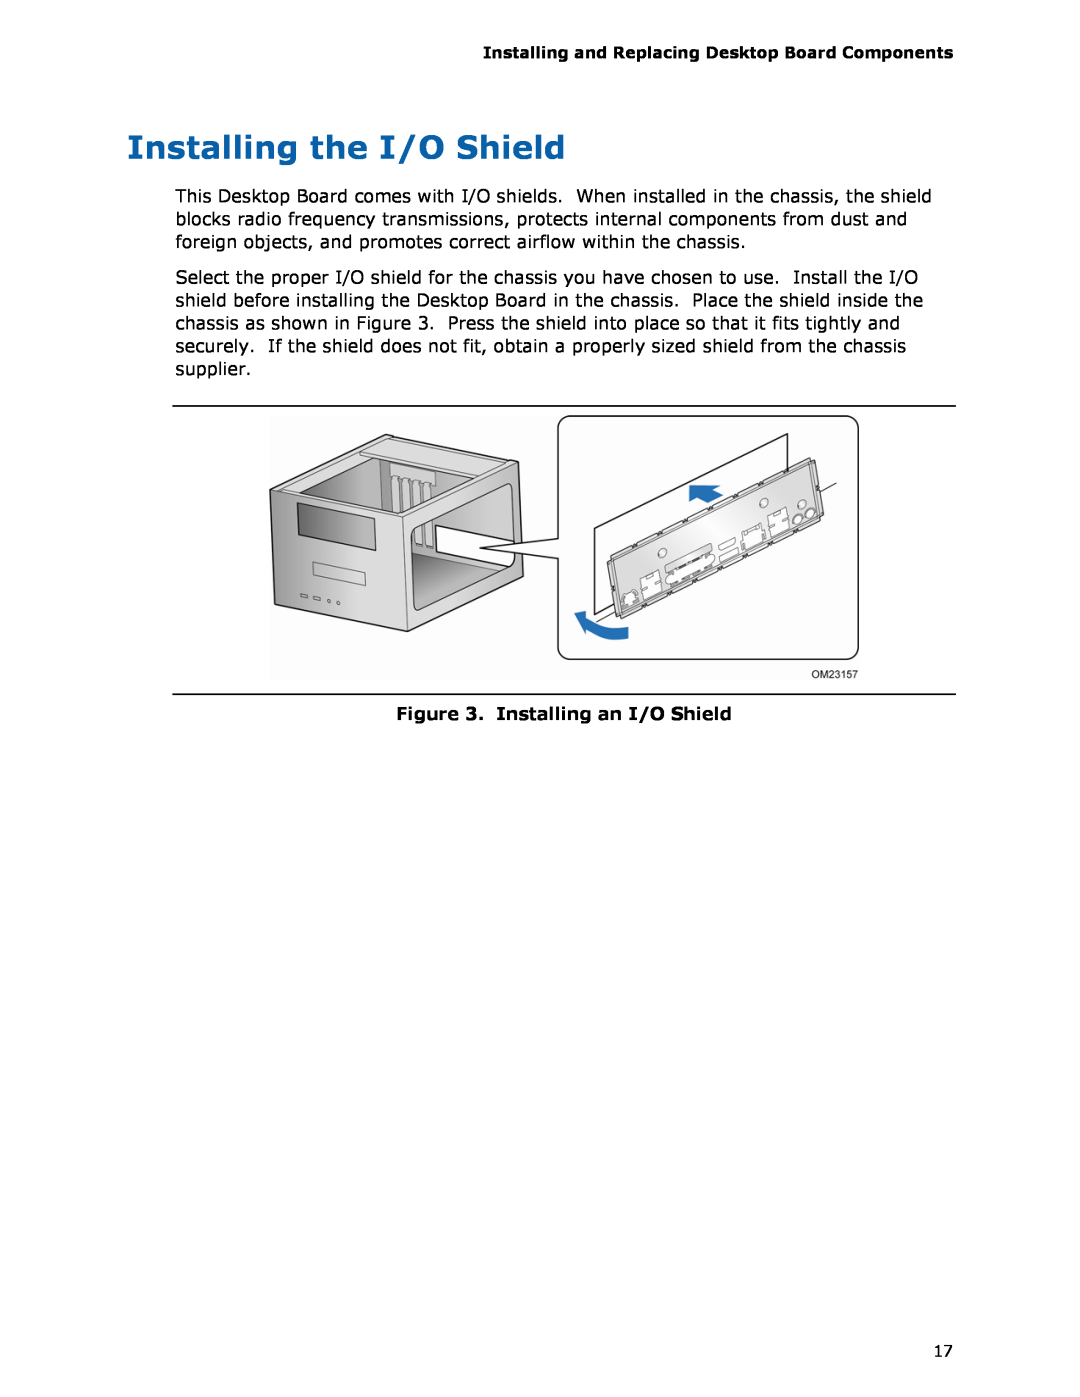 Intel BOXDH61AG manual Installing the I/O Shield, Installing an I/O Shield 